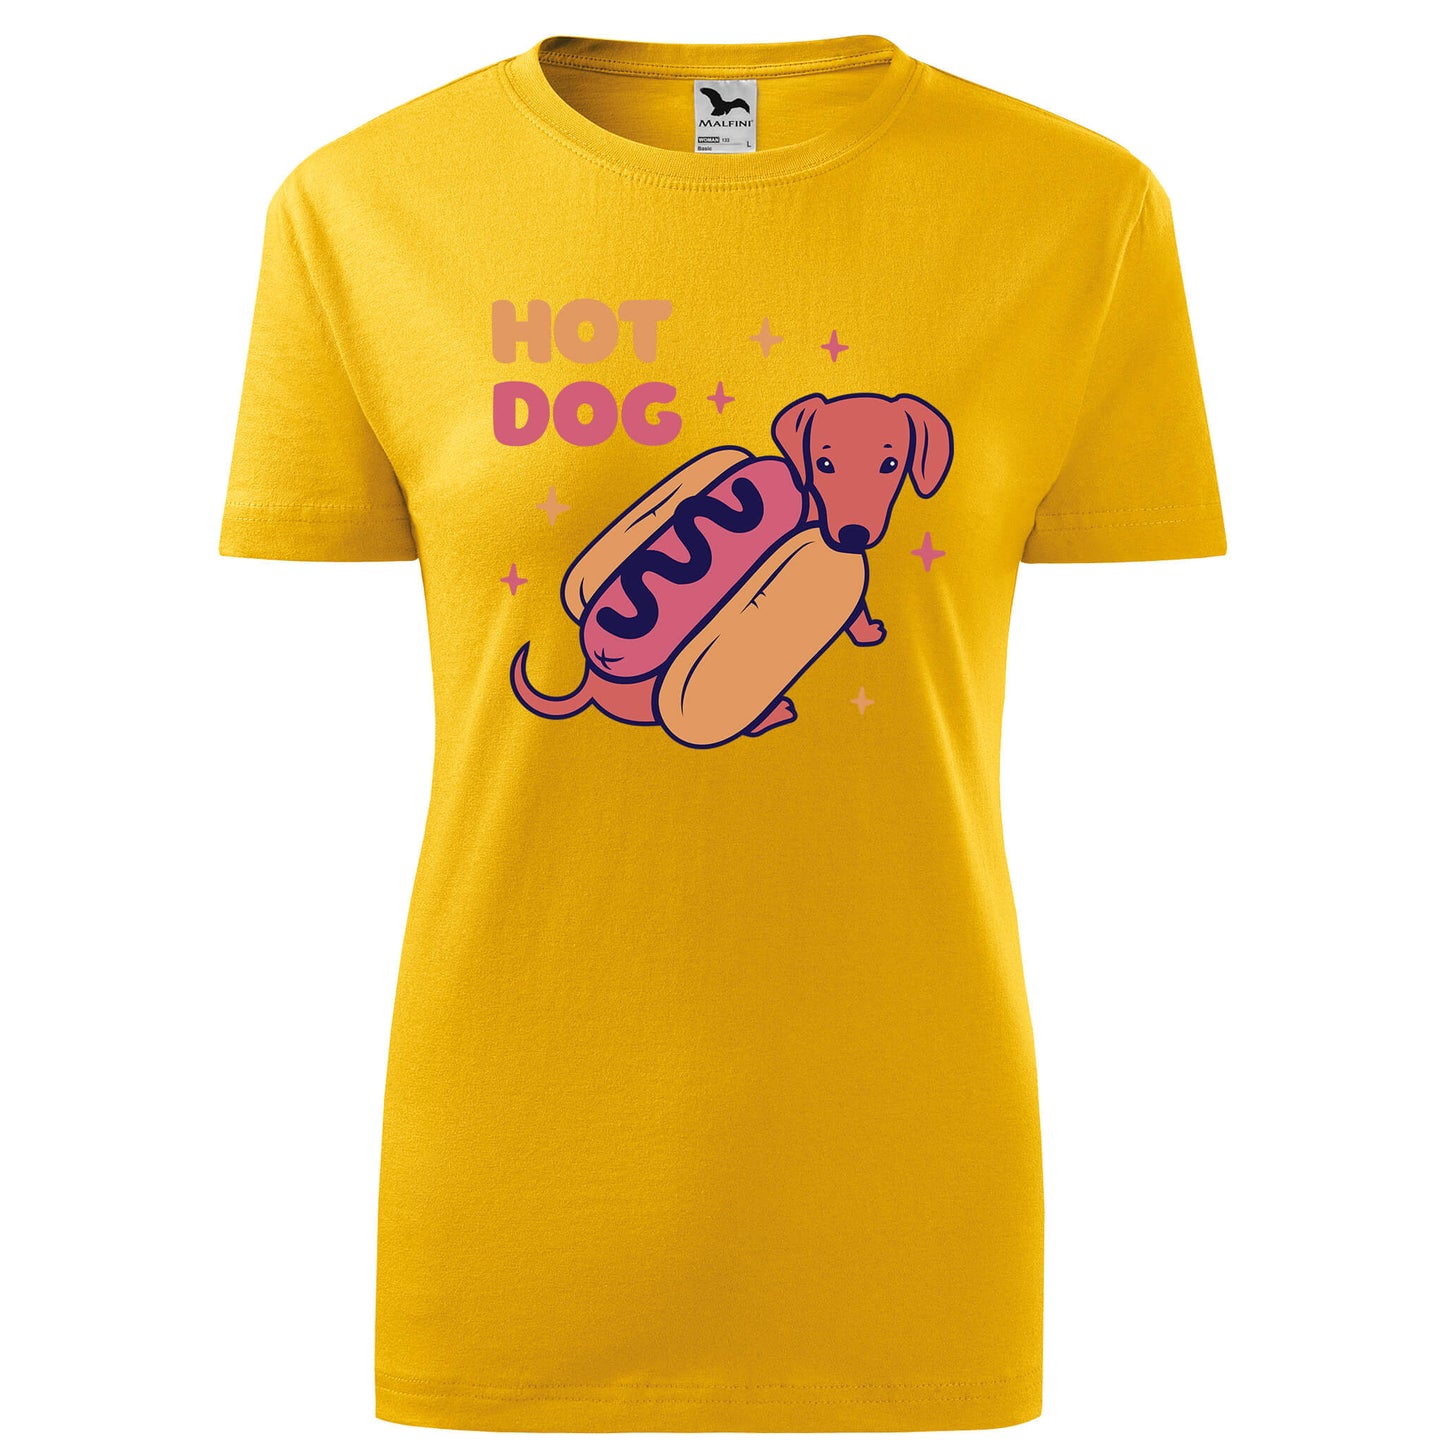 Hot dog t-shirt - rvdesignprint